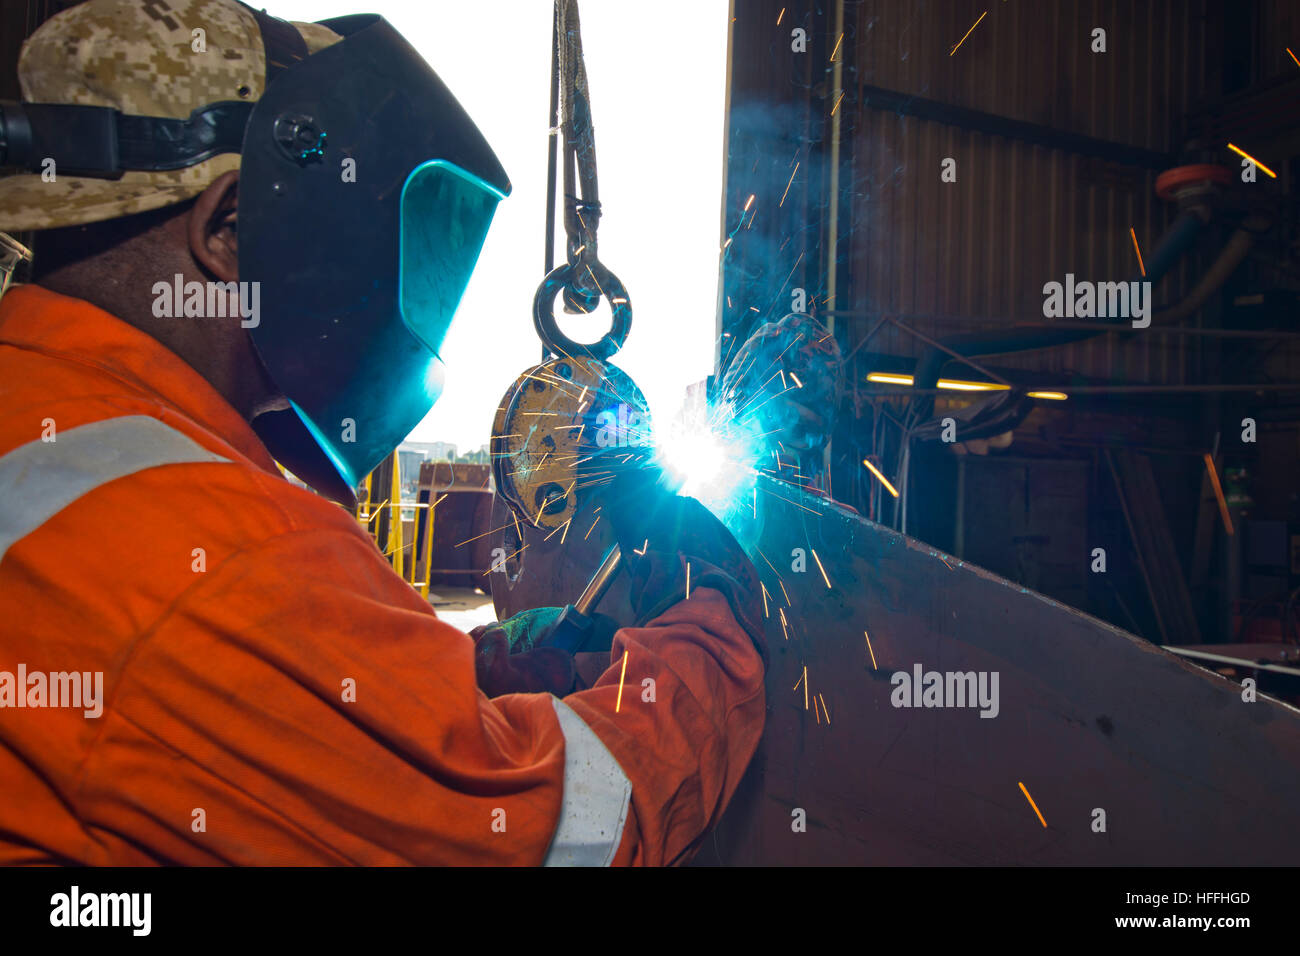 Spot welding steel at industrial engineering works Stock Photo